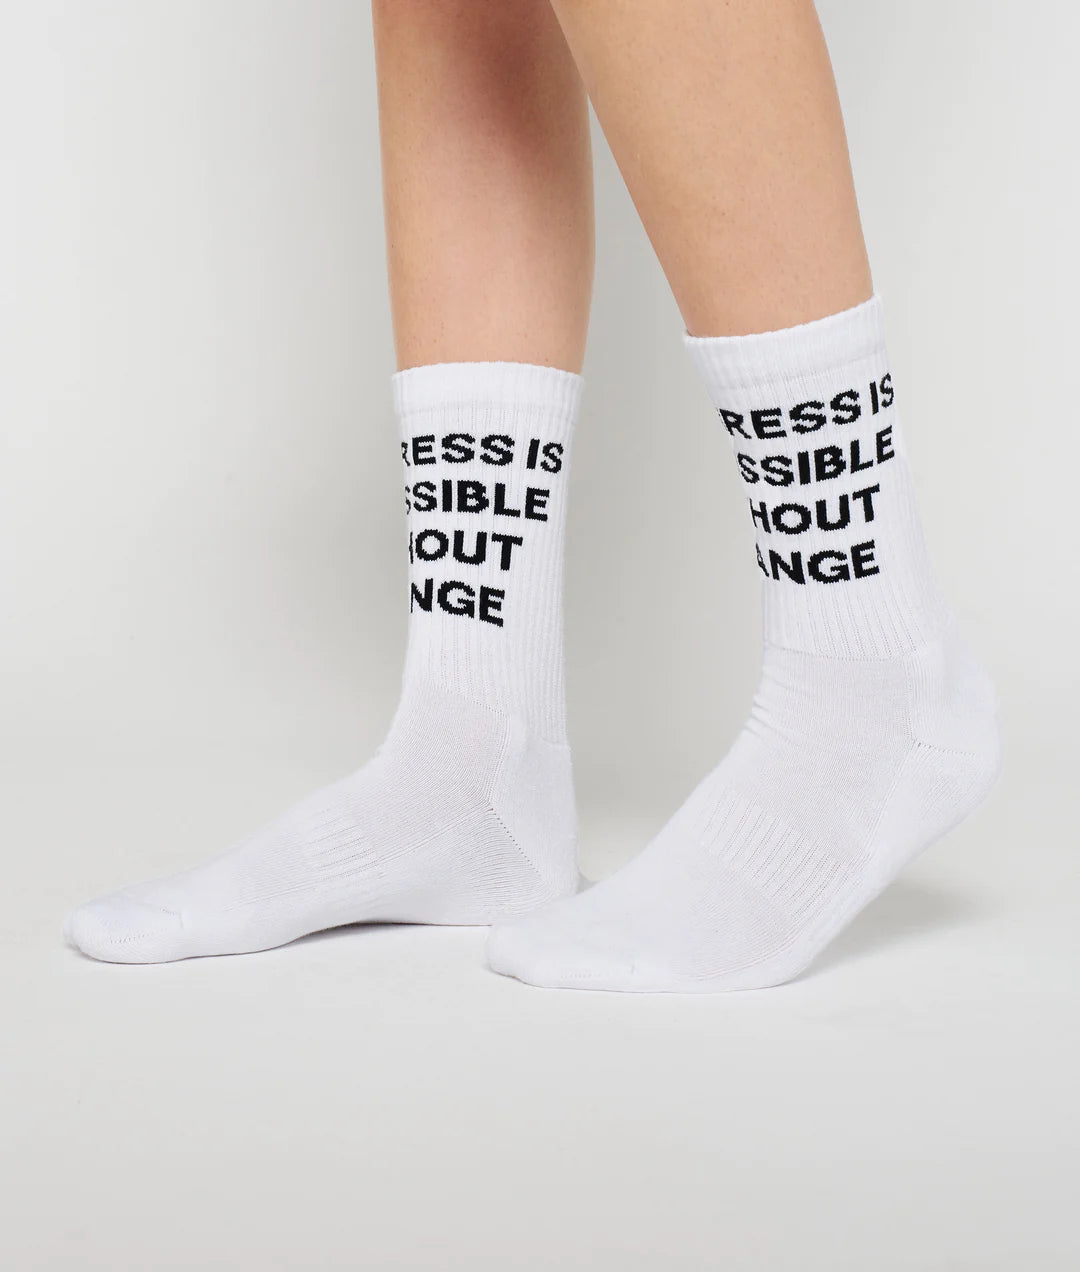 statement socks